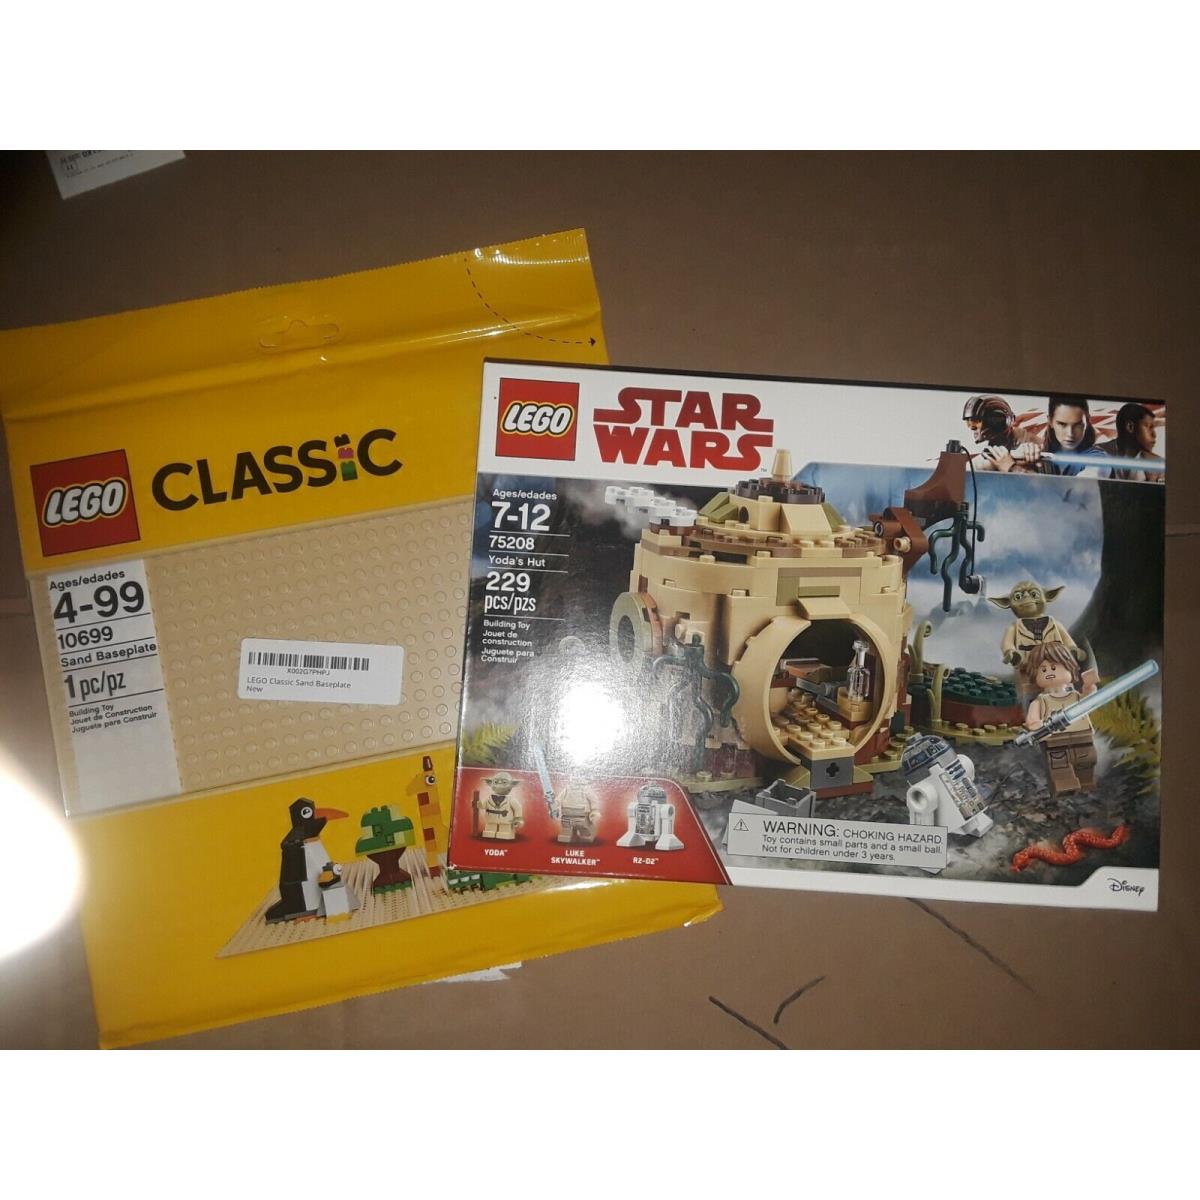 Lego Star Wars 75208 Yoda`s Hut Retired Hard to Find FS